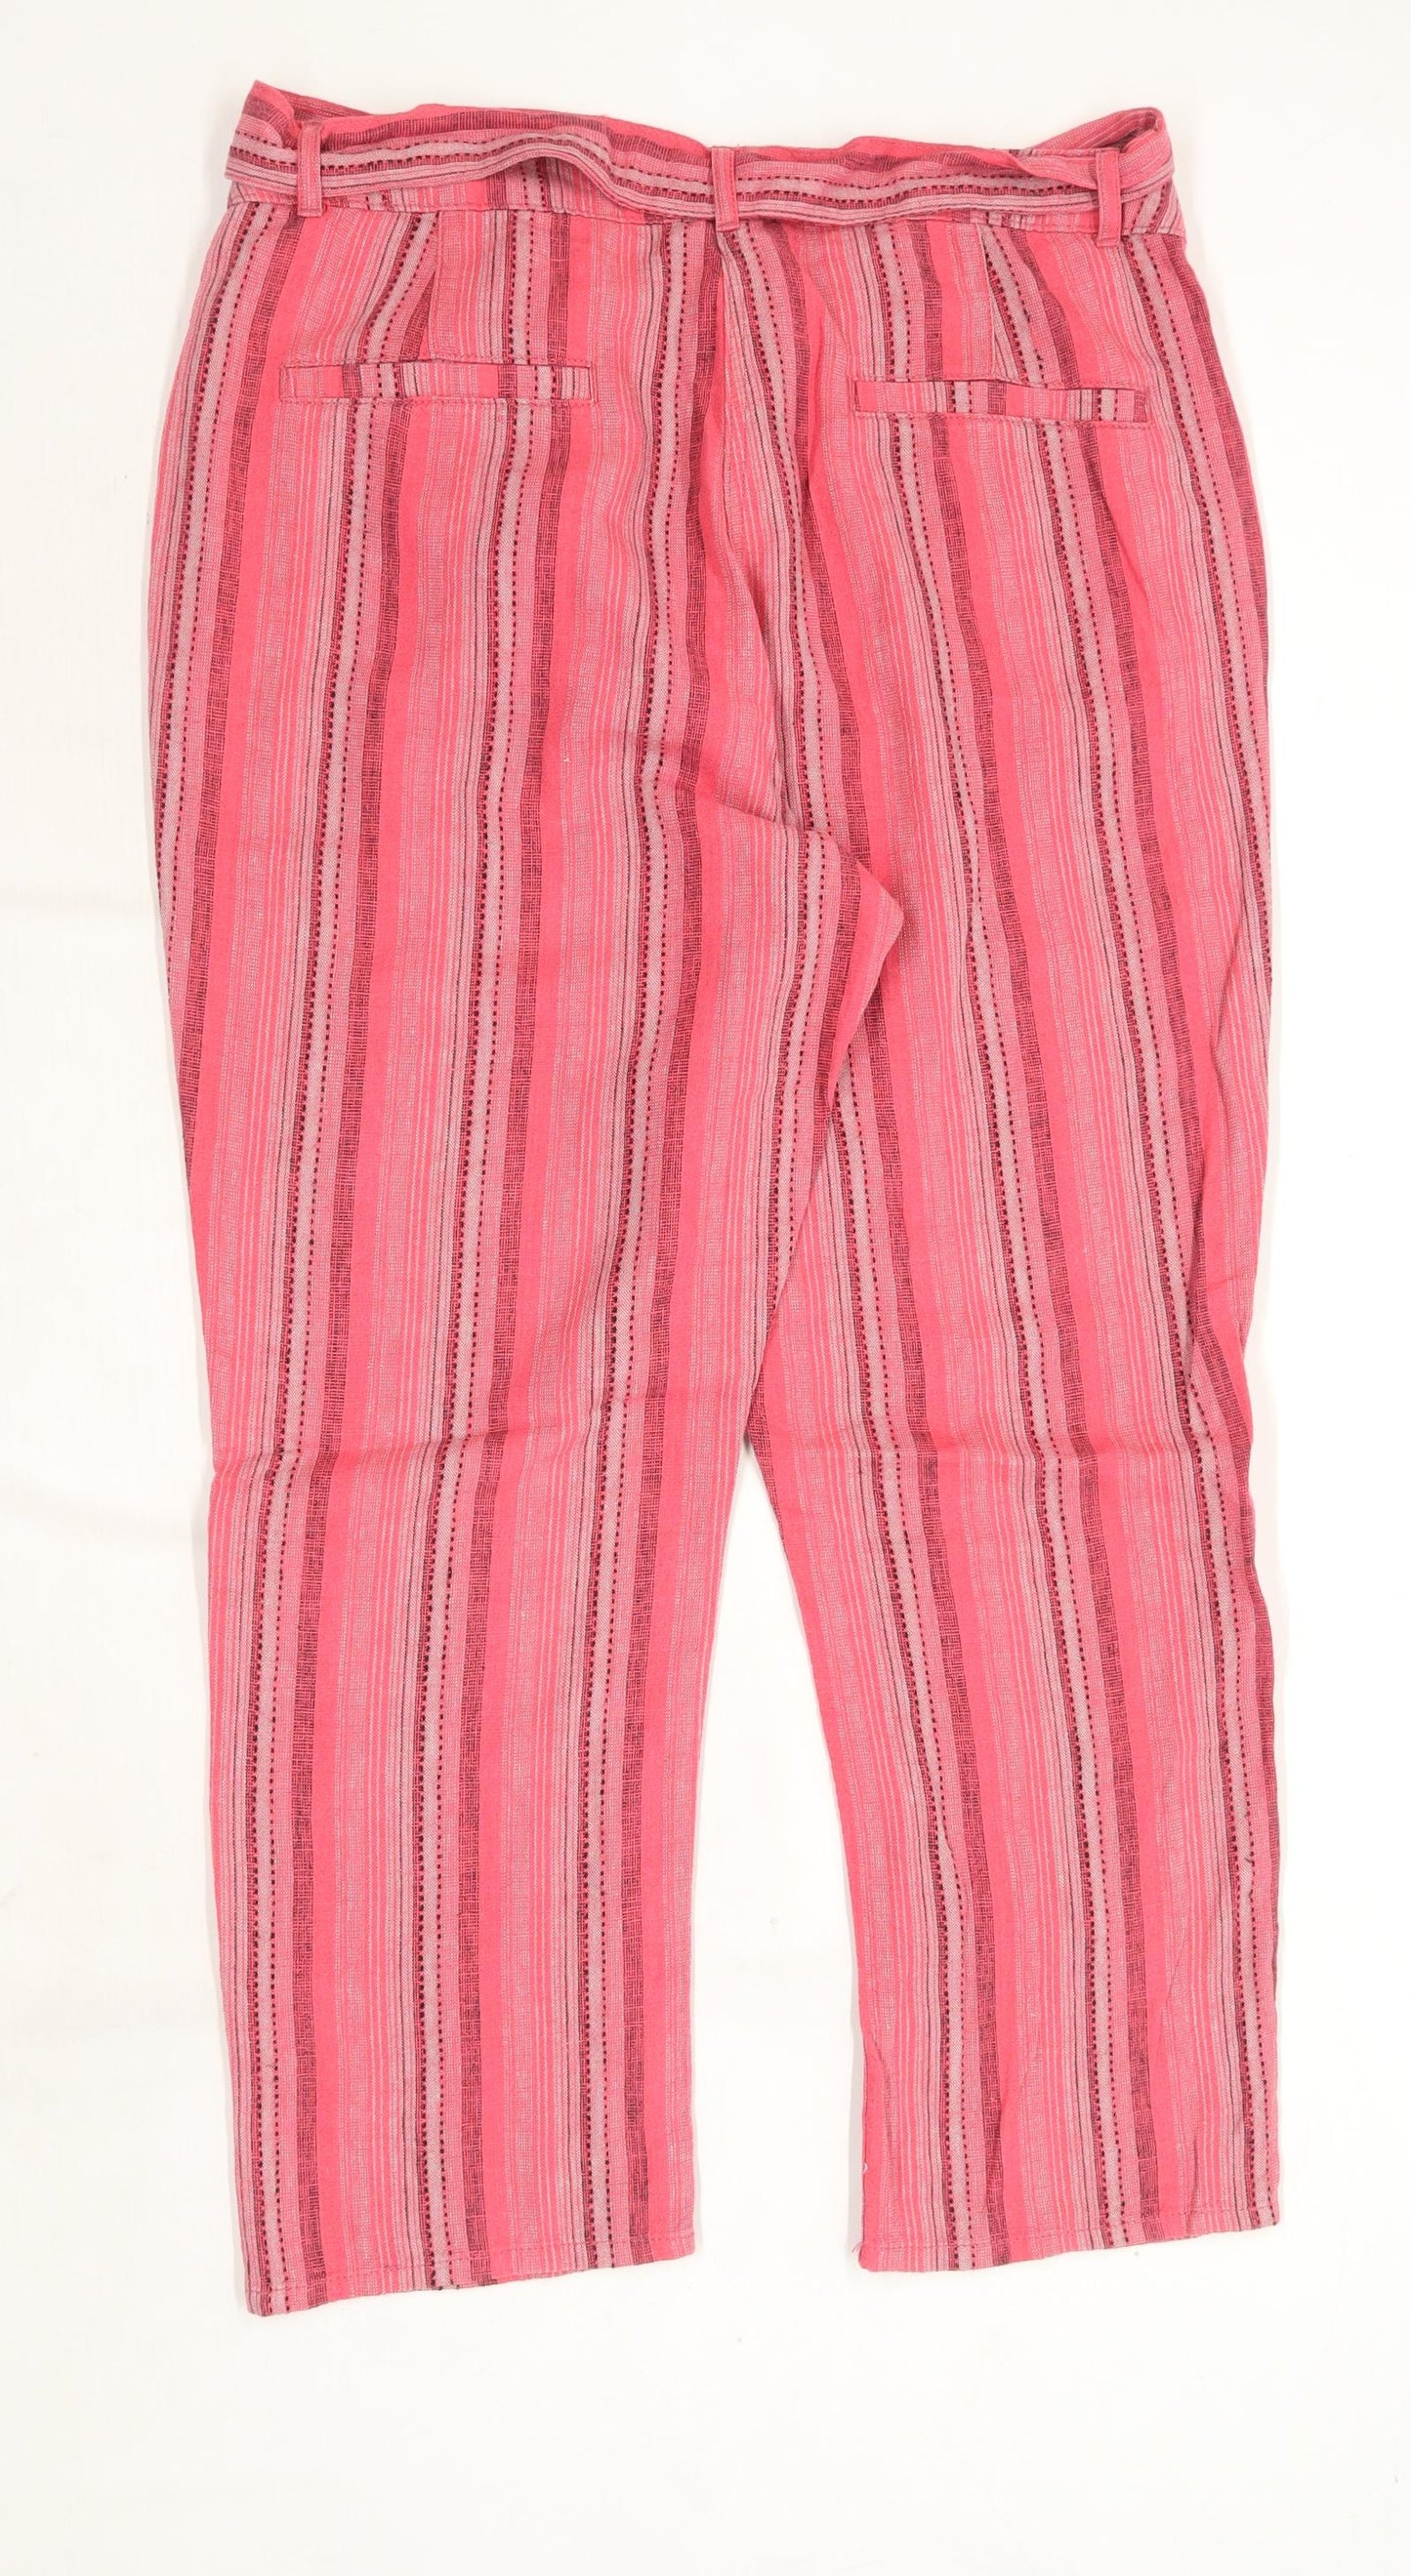 Womens Preworn Red Linen Blend Trousers Size W33/L25